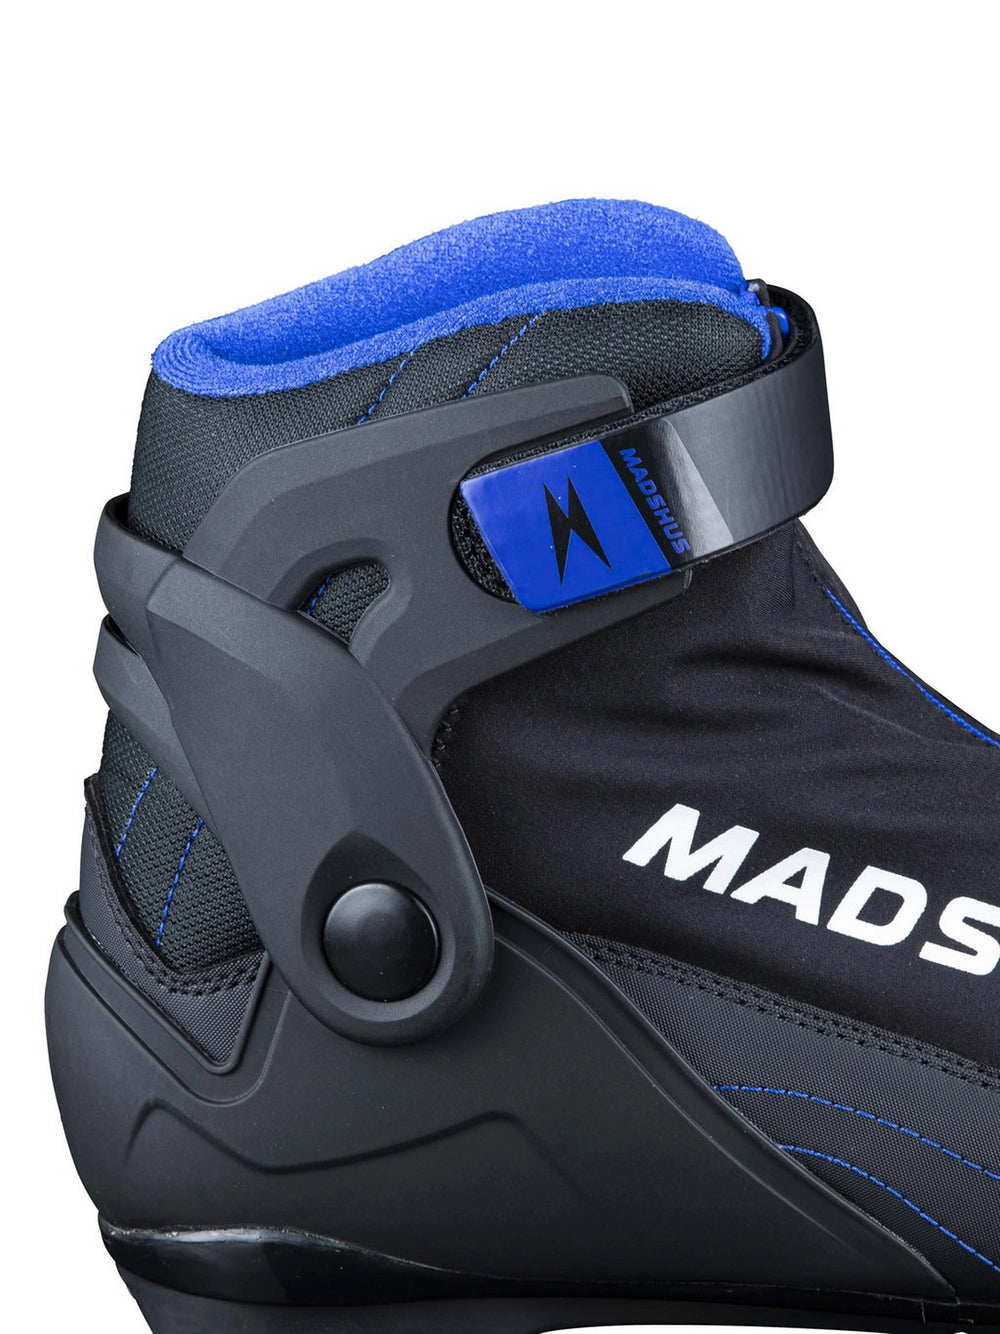 Madshus Active U Ski Boots Men's